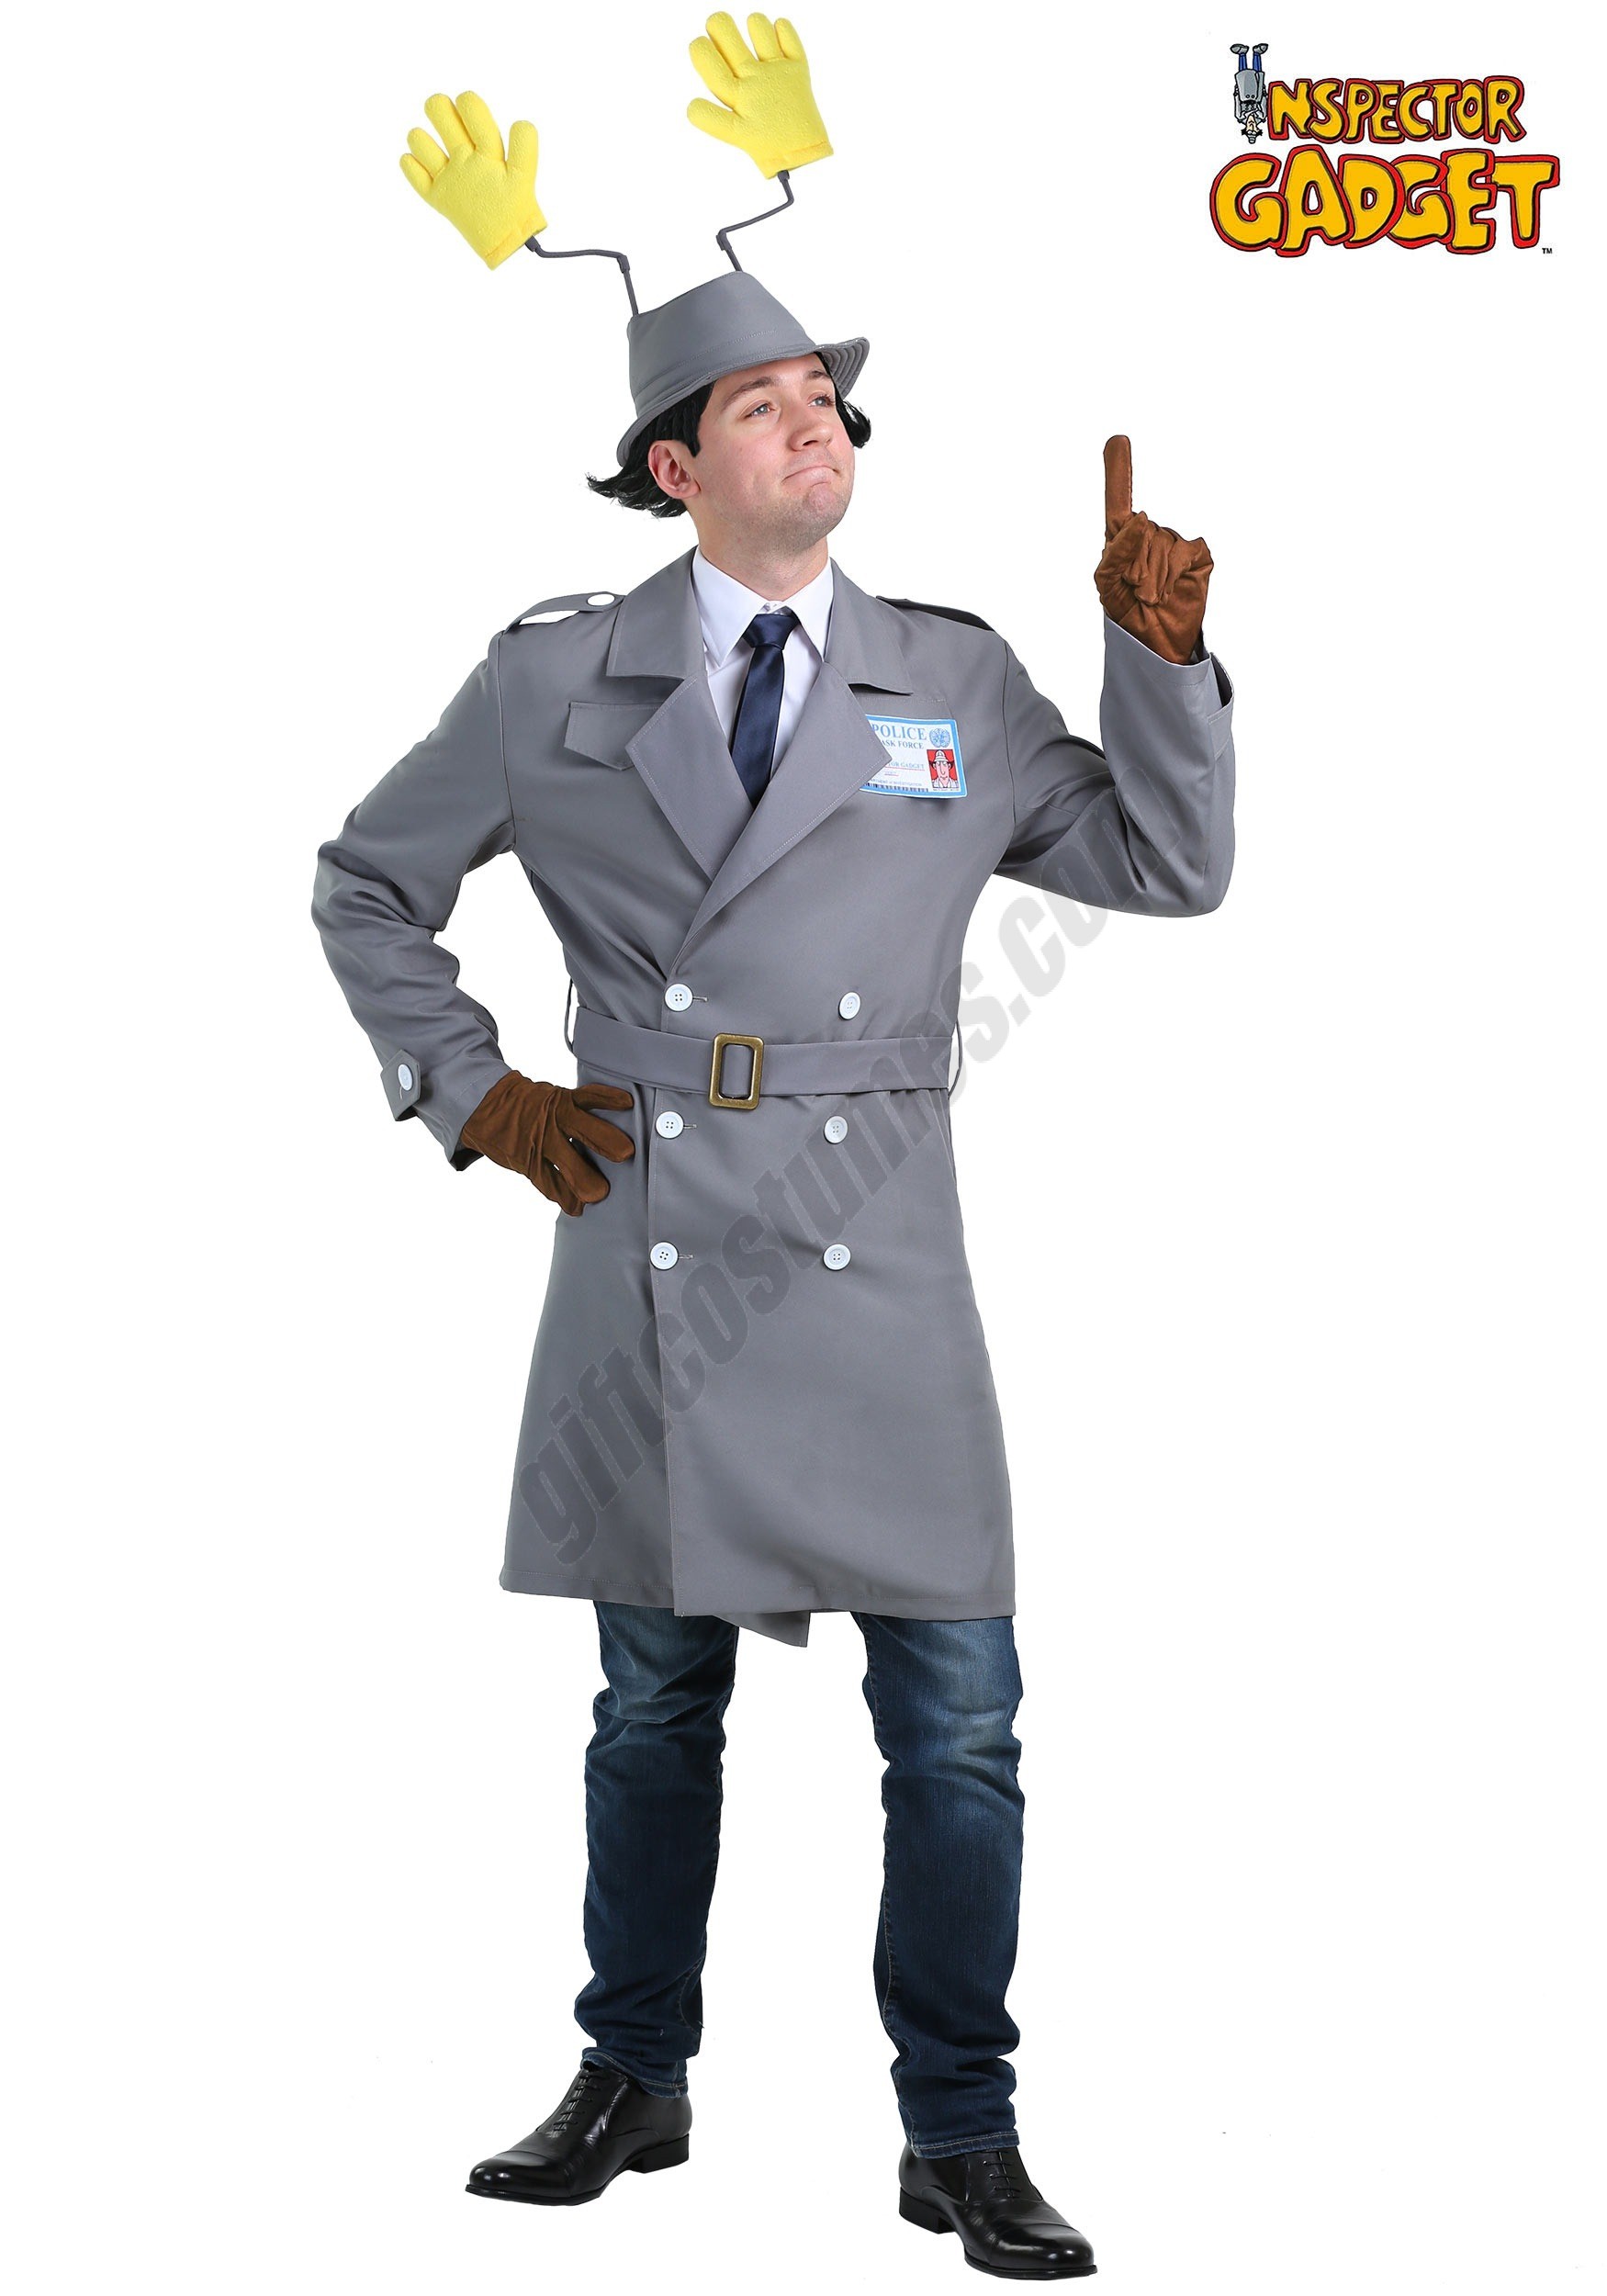  Inspector Gadget Plus Size Men's Costume Promotions -  Inspector Gadget Plus Size Men's Costume Promotions